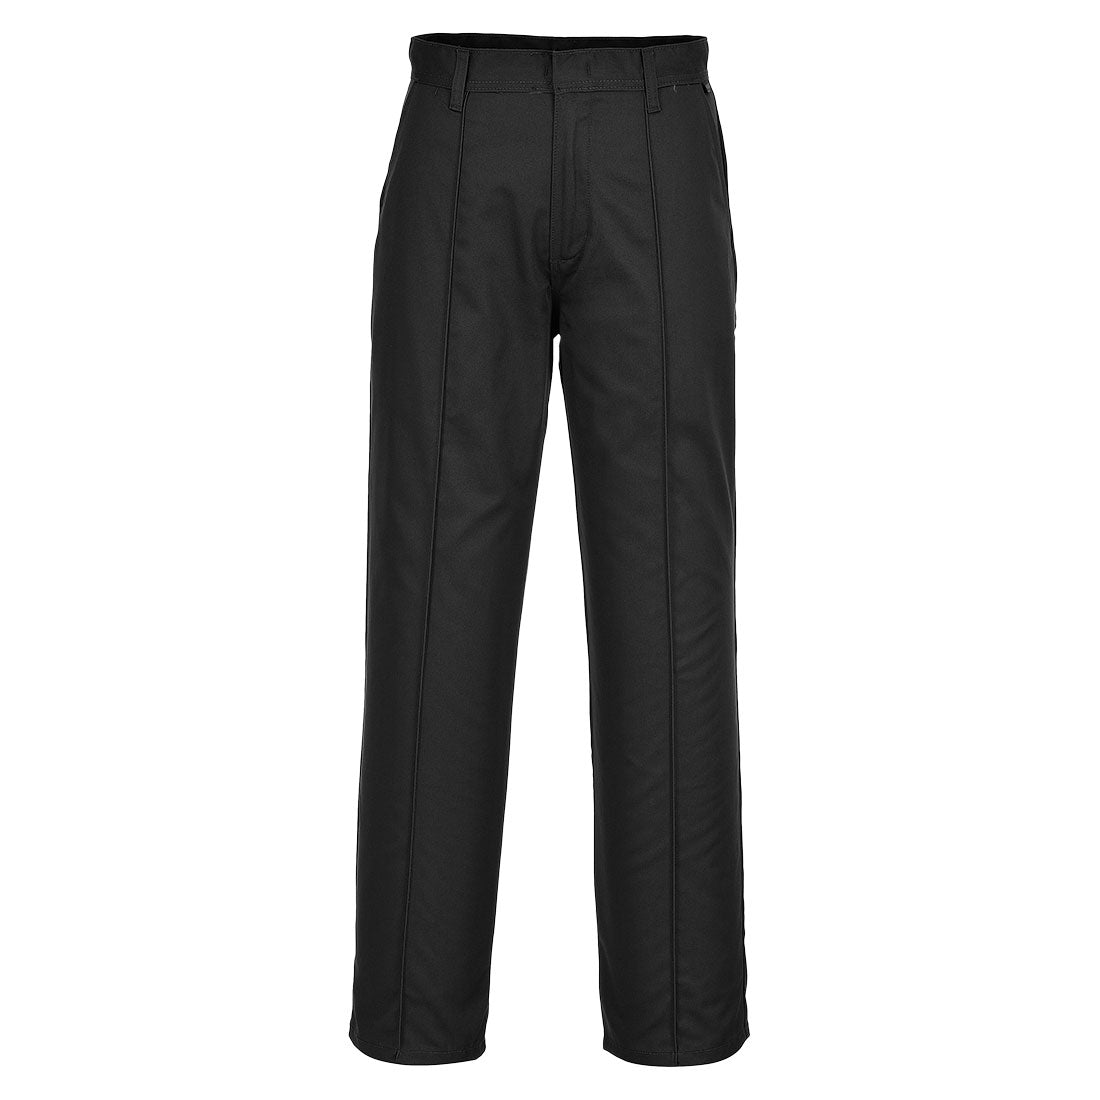 Portwest 2885 - Black Preston Mens Work Trousers with Side Pockets sz 32" Regular